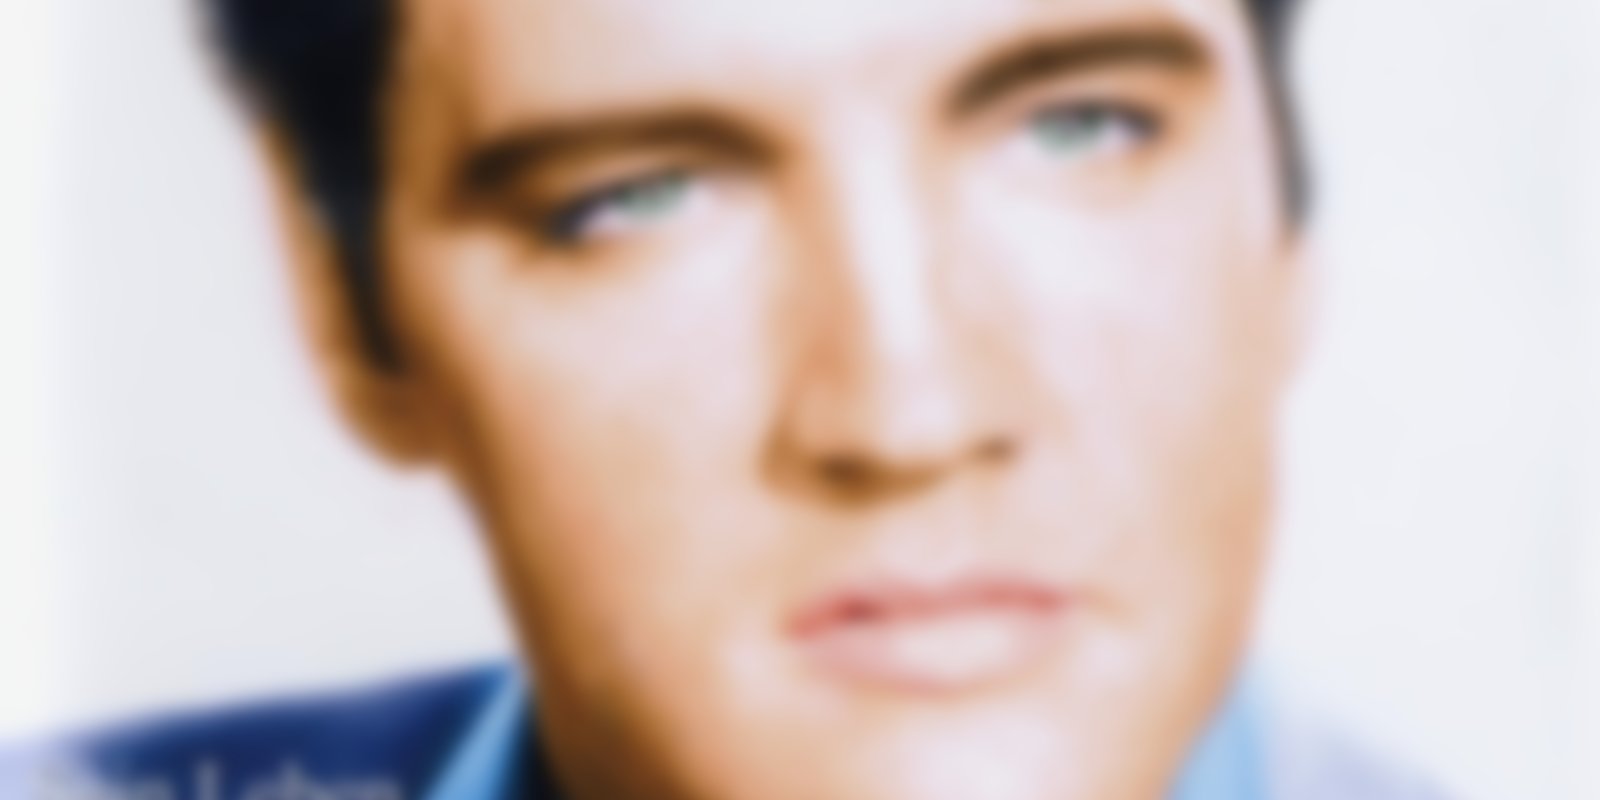 Biografien großer Stars - Elvis Presley